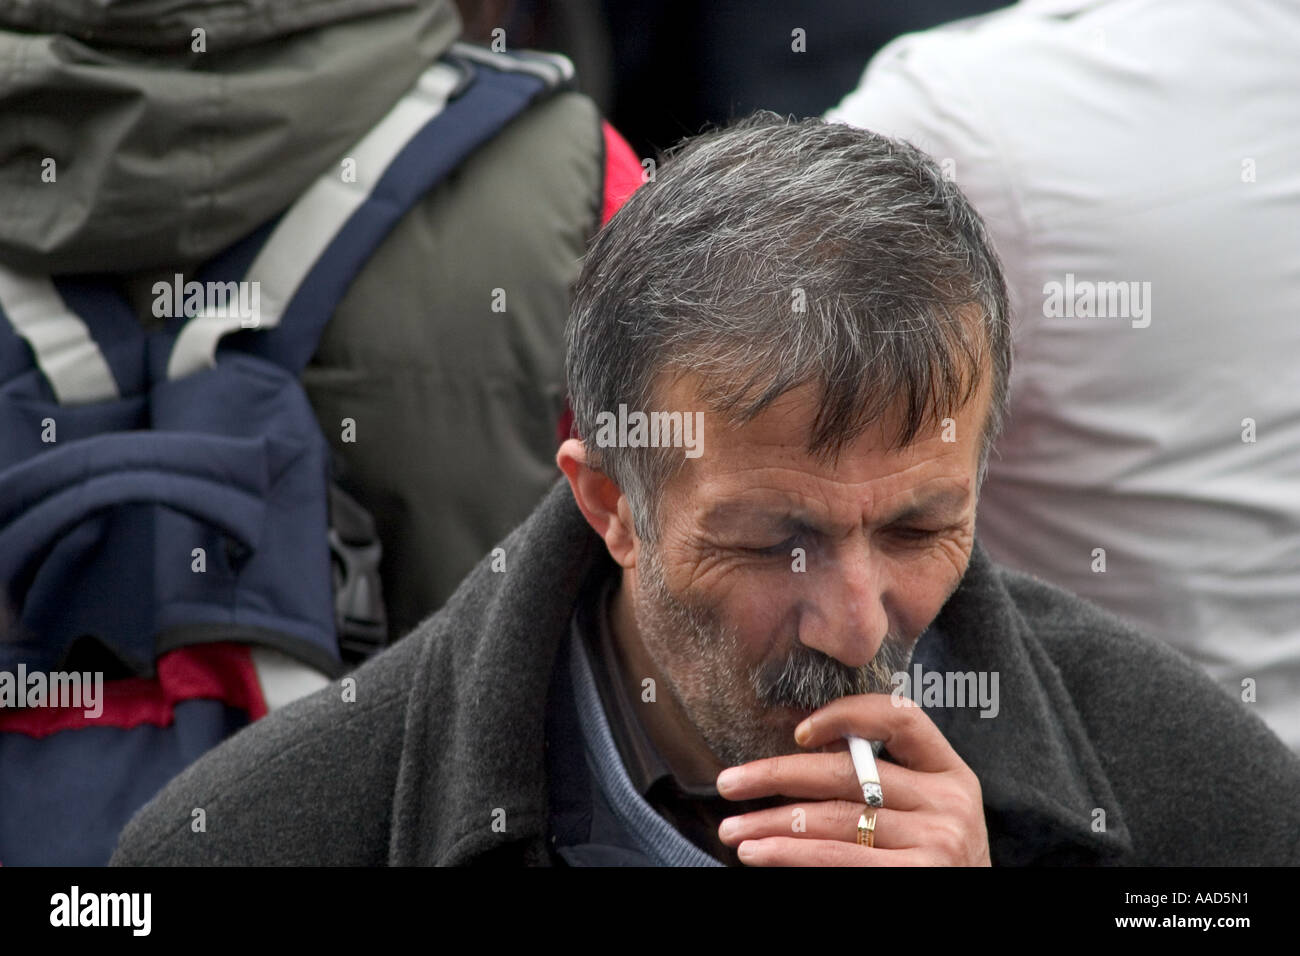 Unshaven man smoking cigarette in crowd. Trafalgar Square, London England Stock Photo